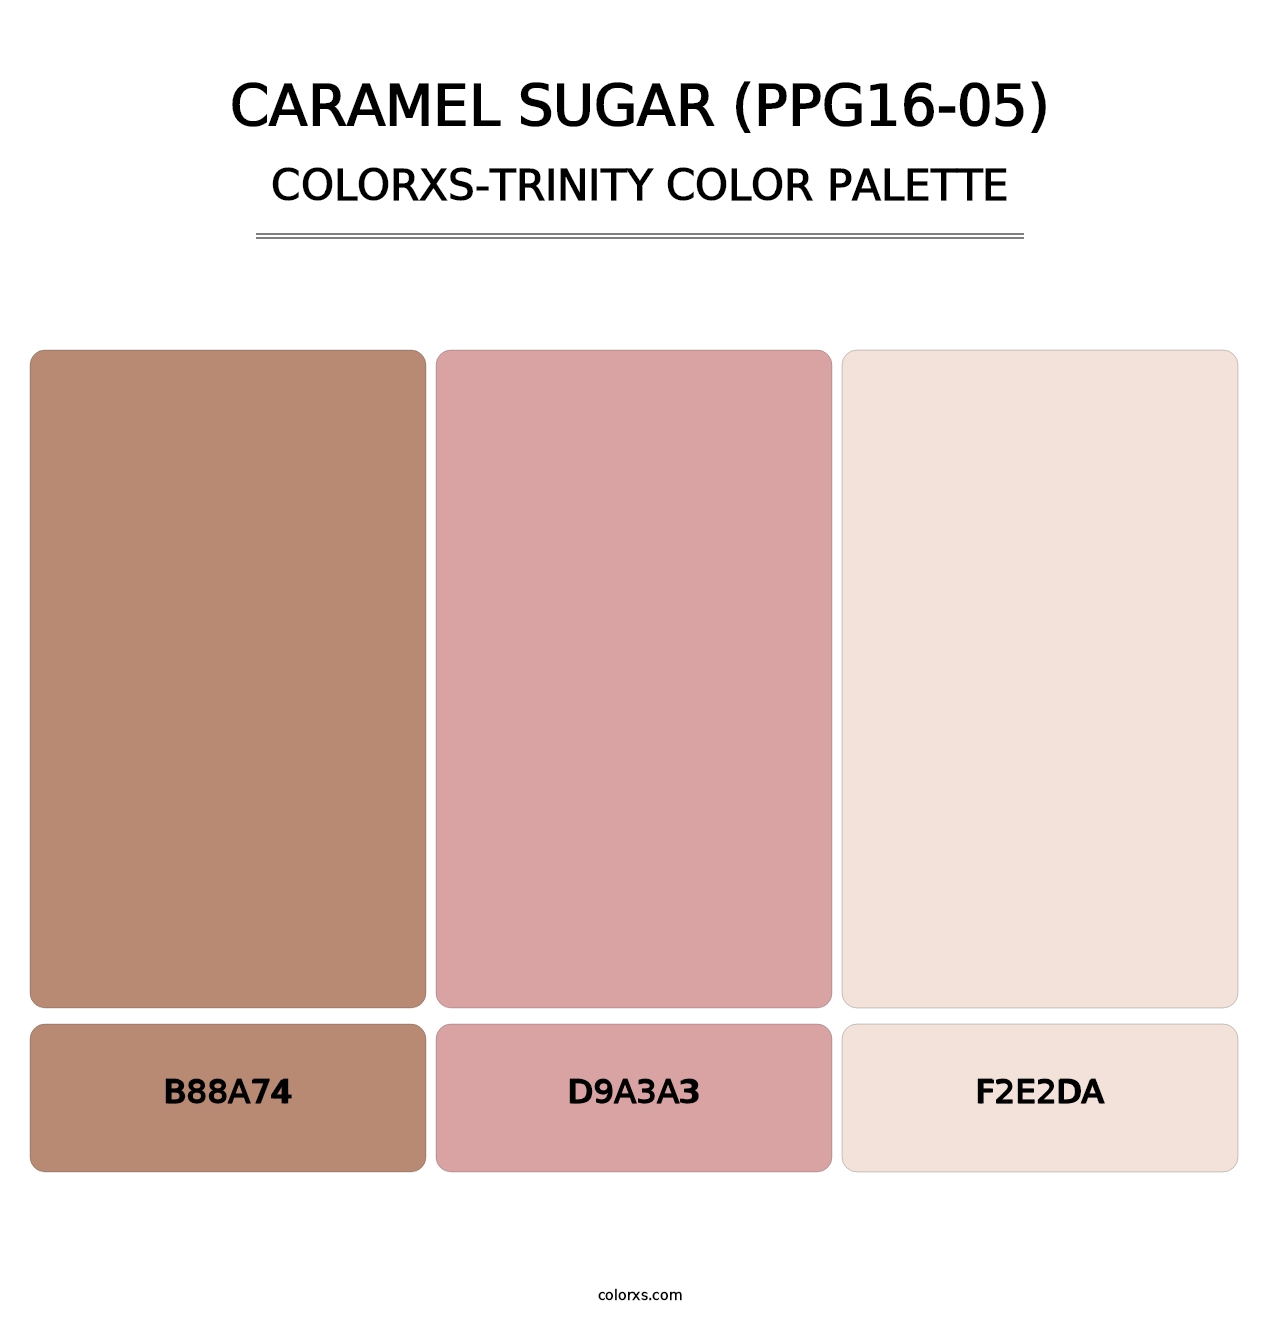 Caramel Sugar (PPG16-05) - Colorxs Trinity Palette